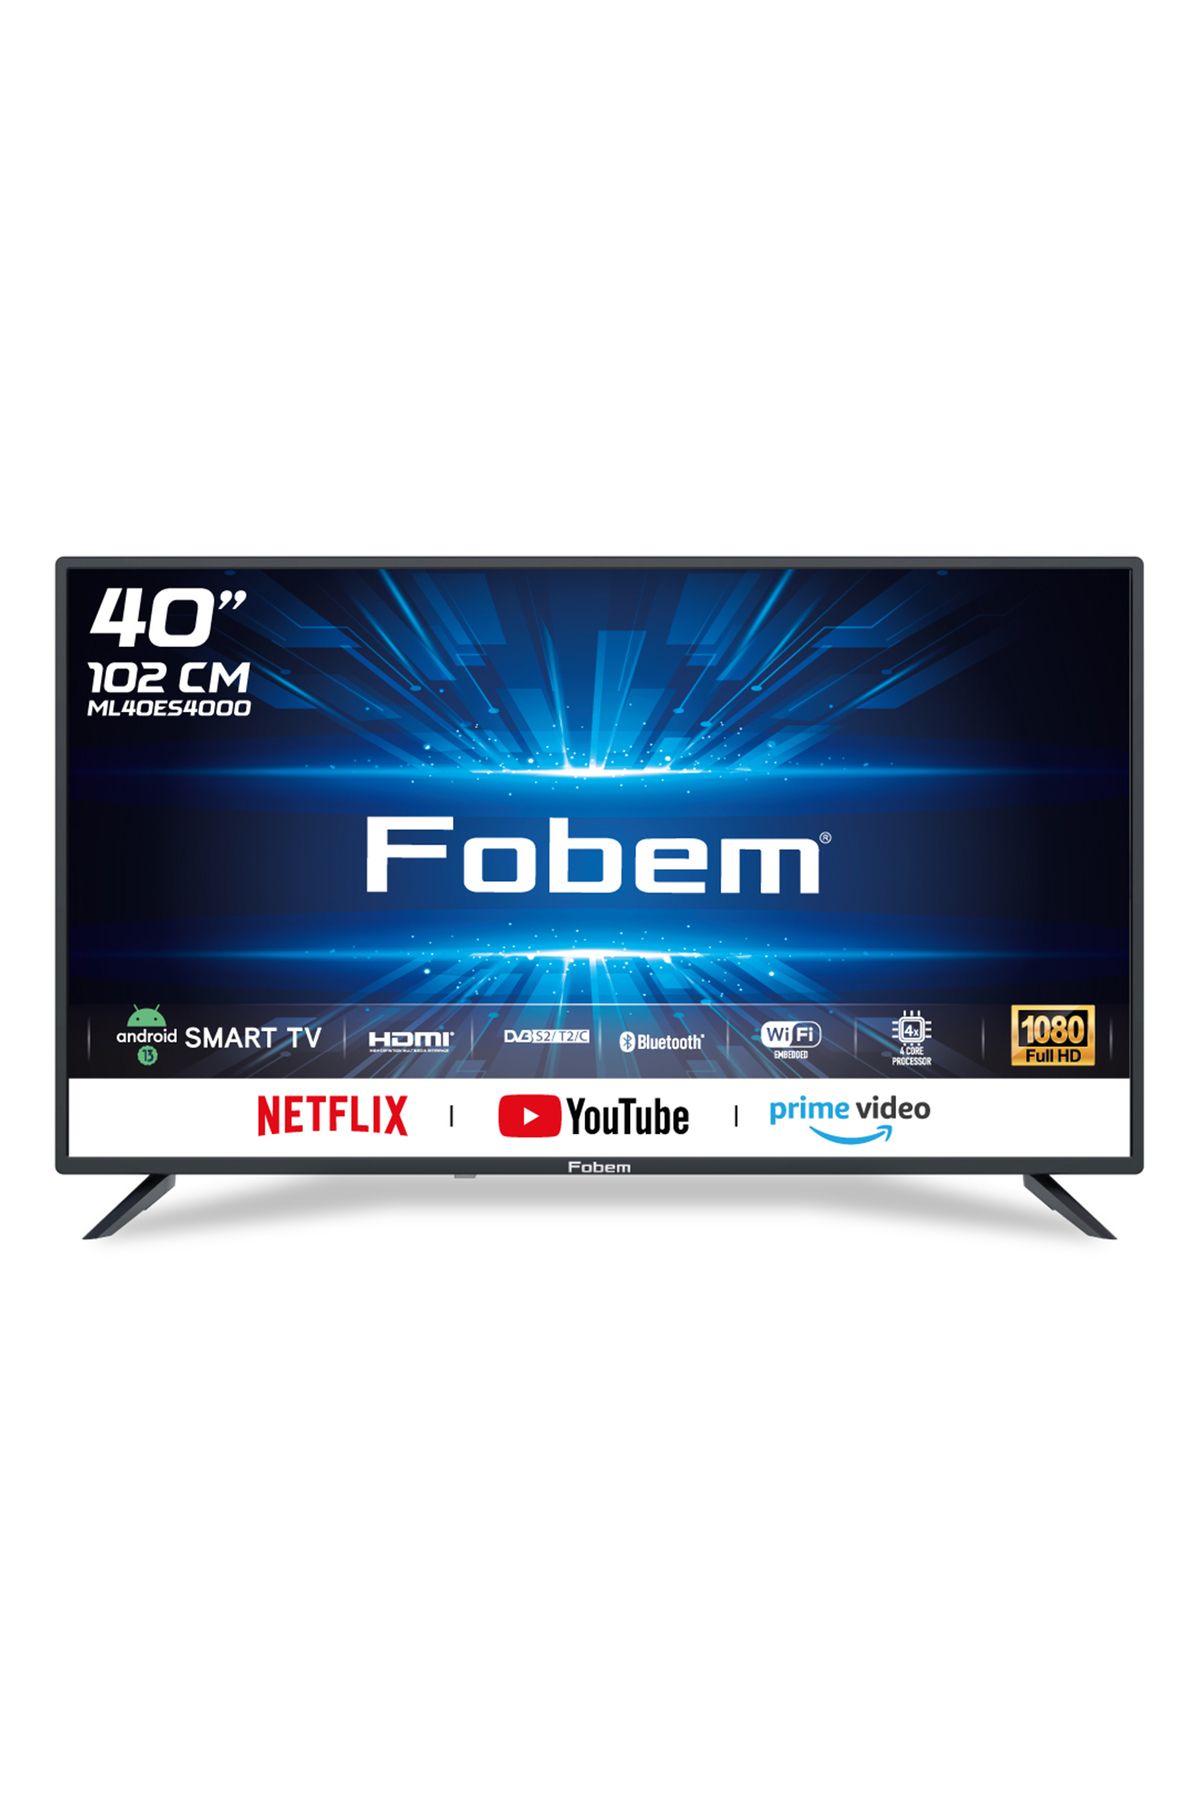 FOBEM ML40ES4000 40" 102 cm Ekran FULL HD Android Smart LED TV - Dahili Uydu Alıcılı